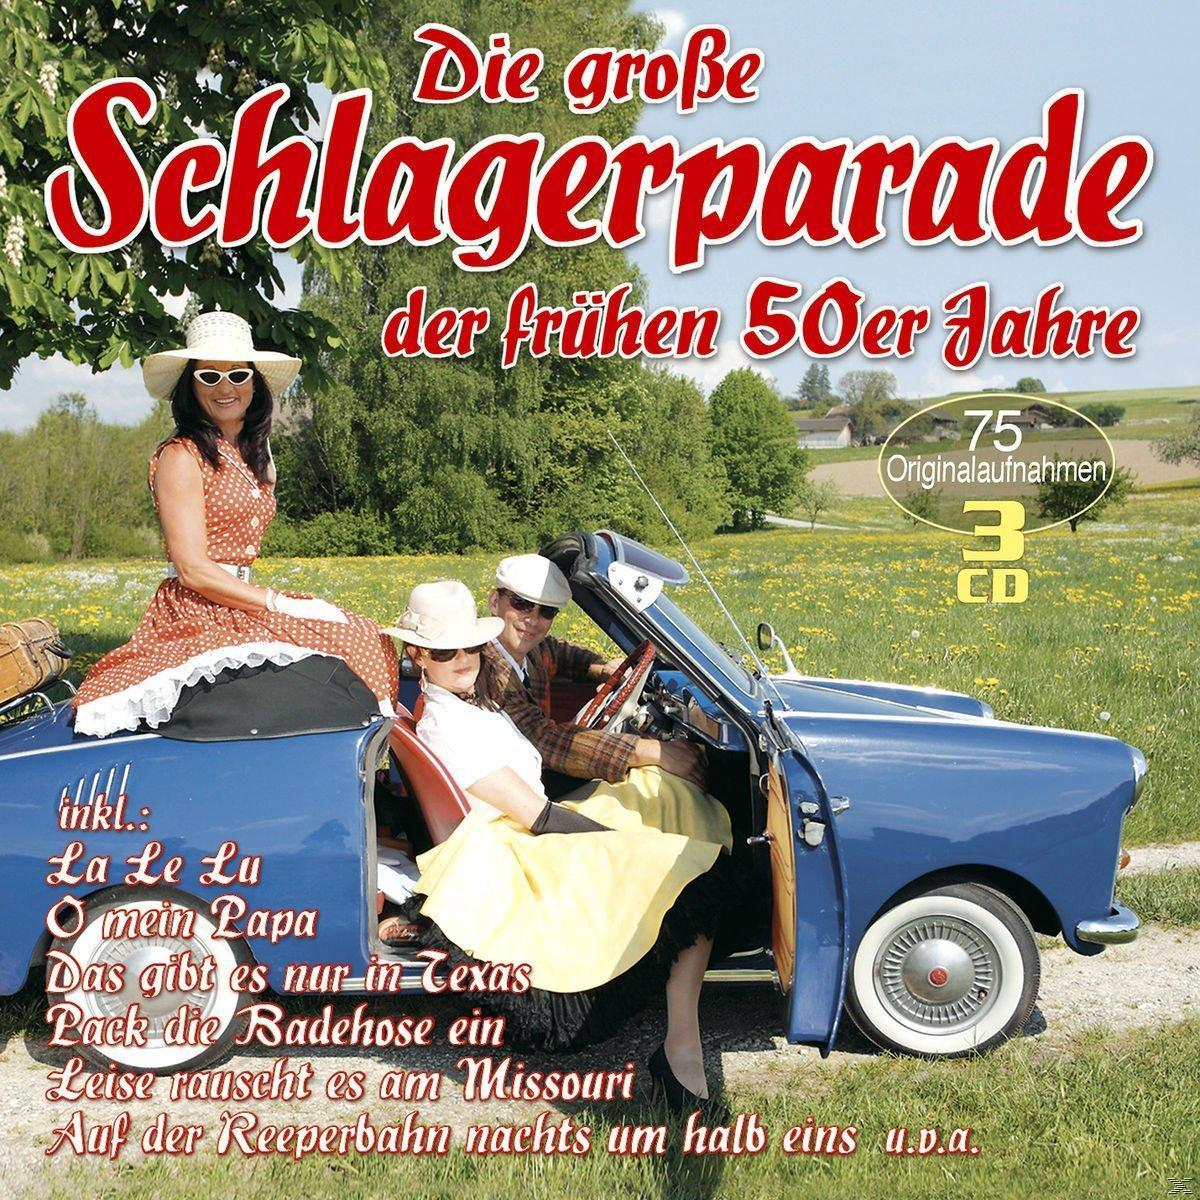 VARIOUS - Die Frühen Der Jahre - Schlagerparade Große 50er (CD)